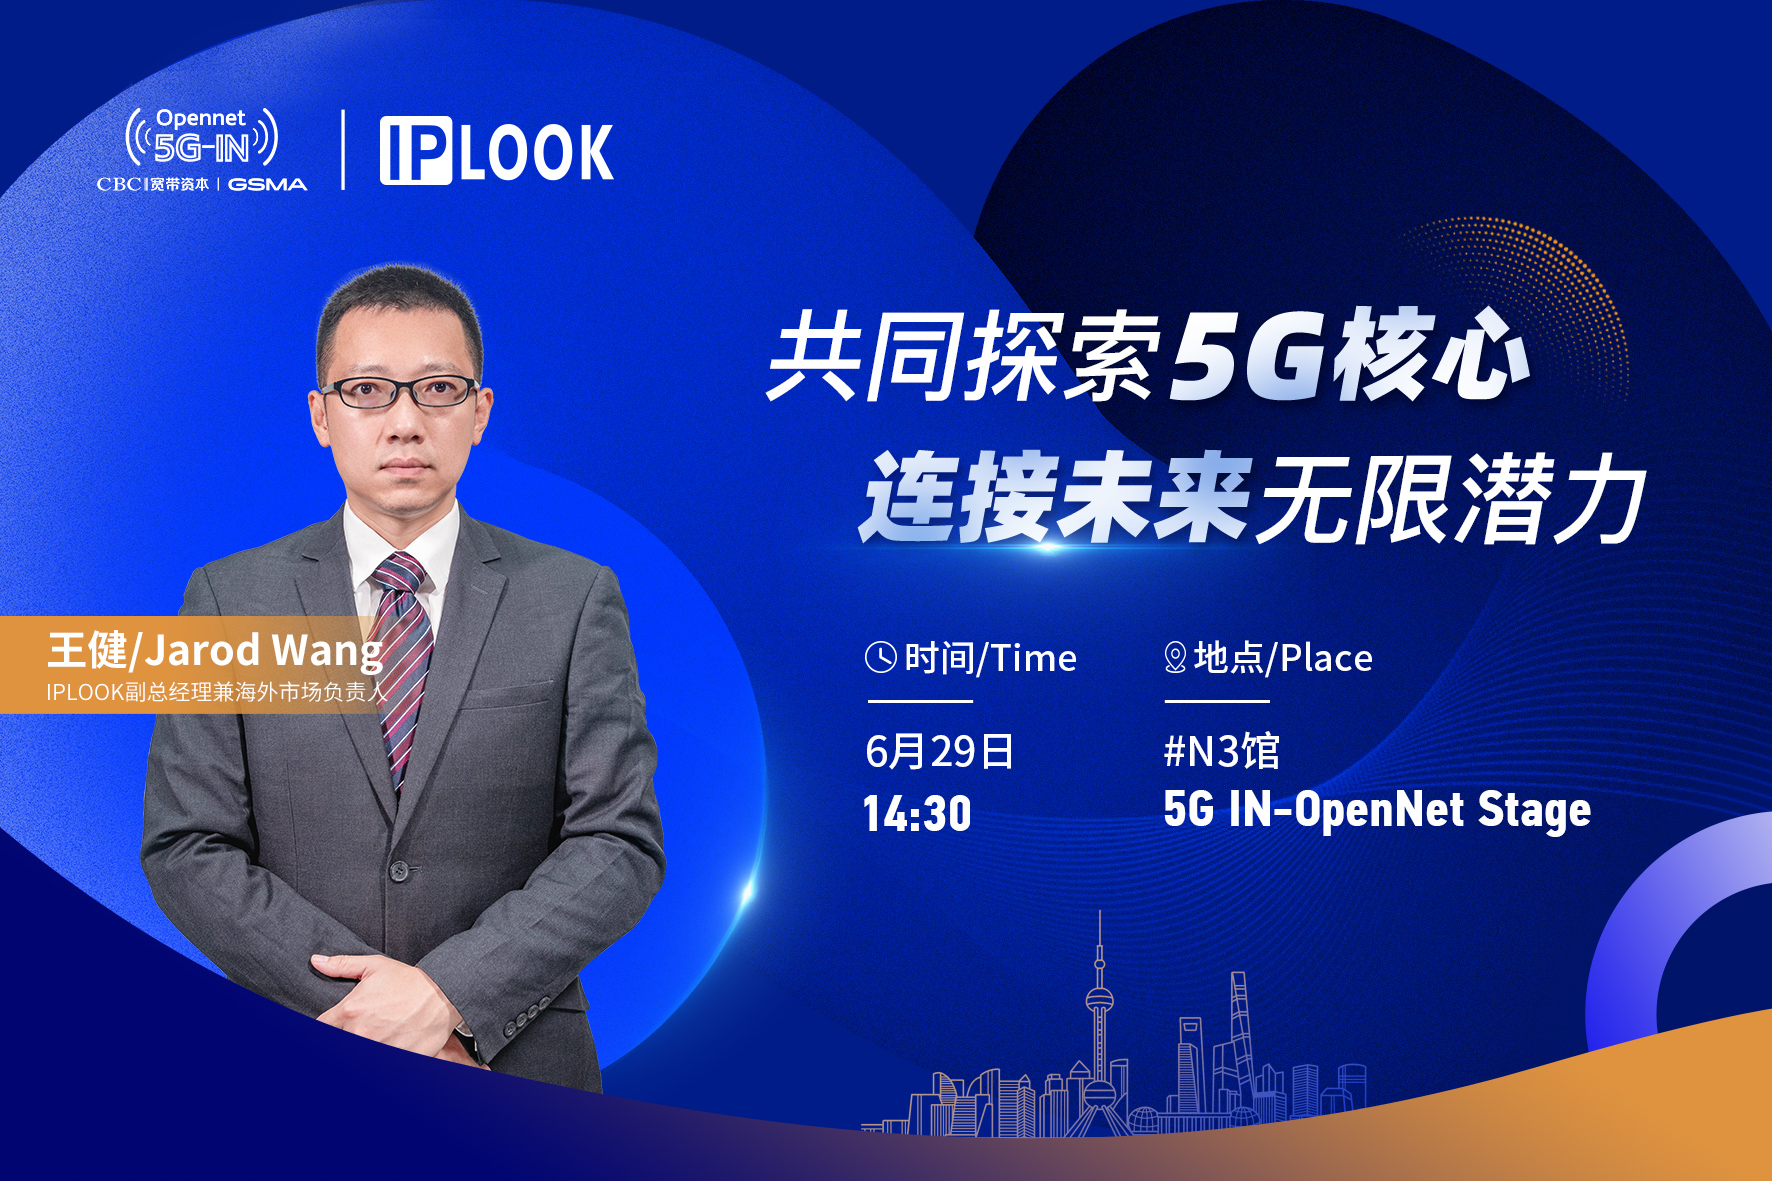 IPLOOK副总经理兼海外市场负责人王健将发表主题演讲